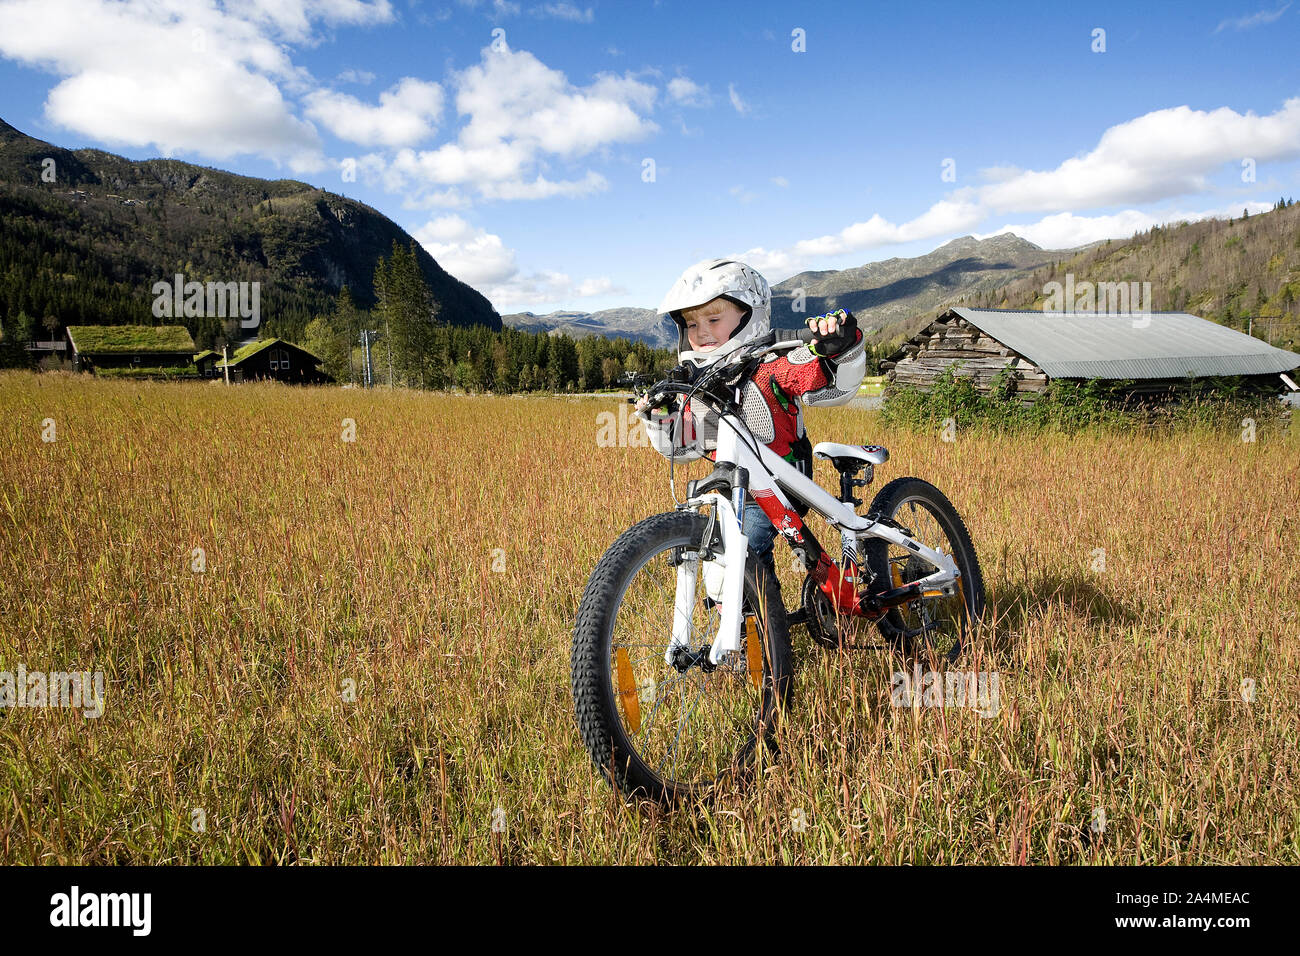 Boy Mountain Biking At Rural Landscape Stock Photo